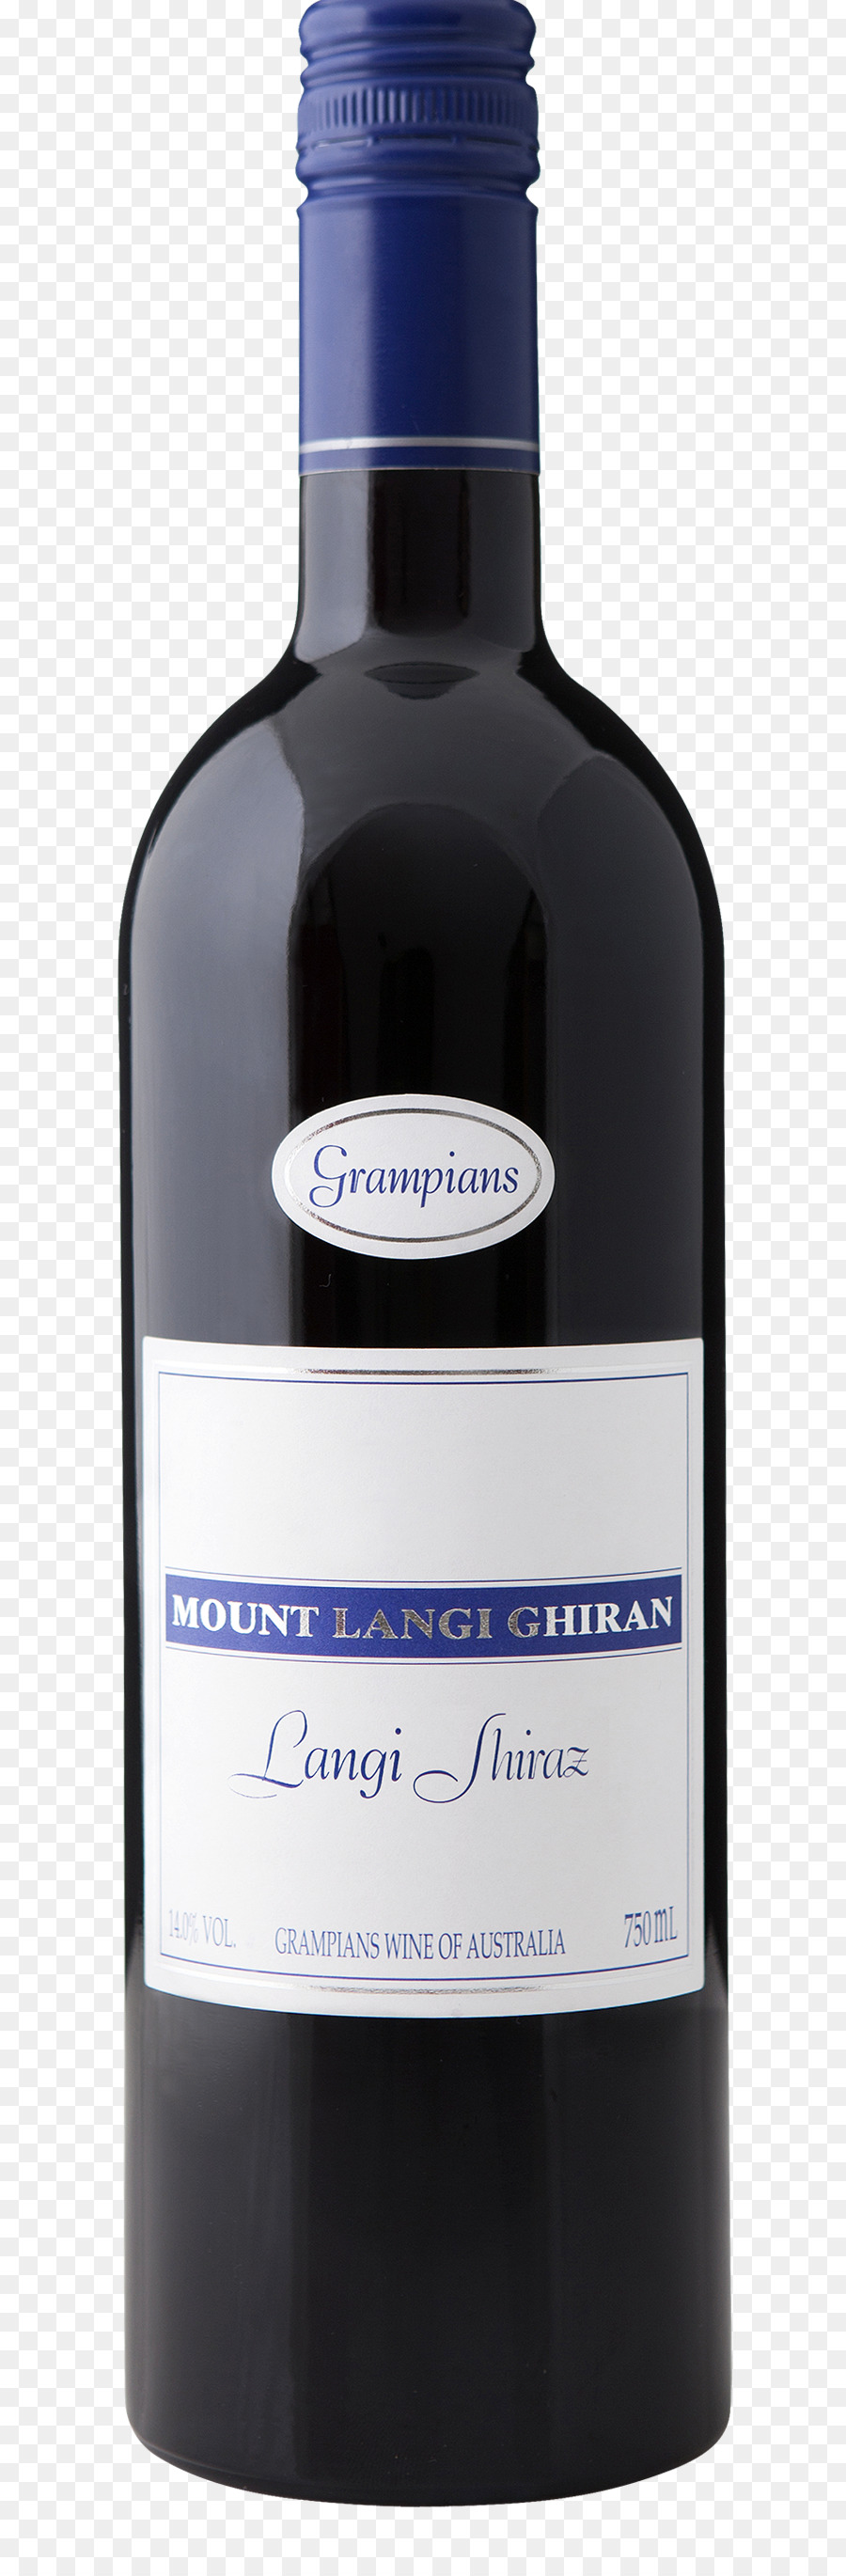 Mulden Shiraz Mount Langi Ghiran Rotwein Likör - Cliffhanger Pinot Grigio